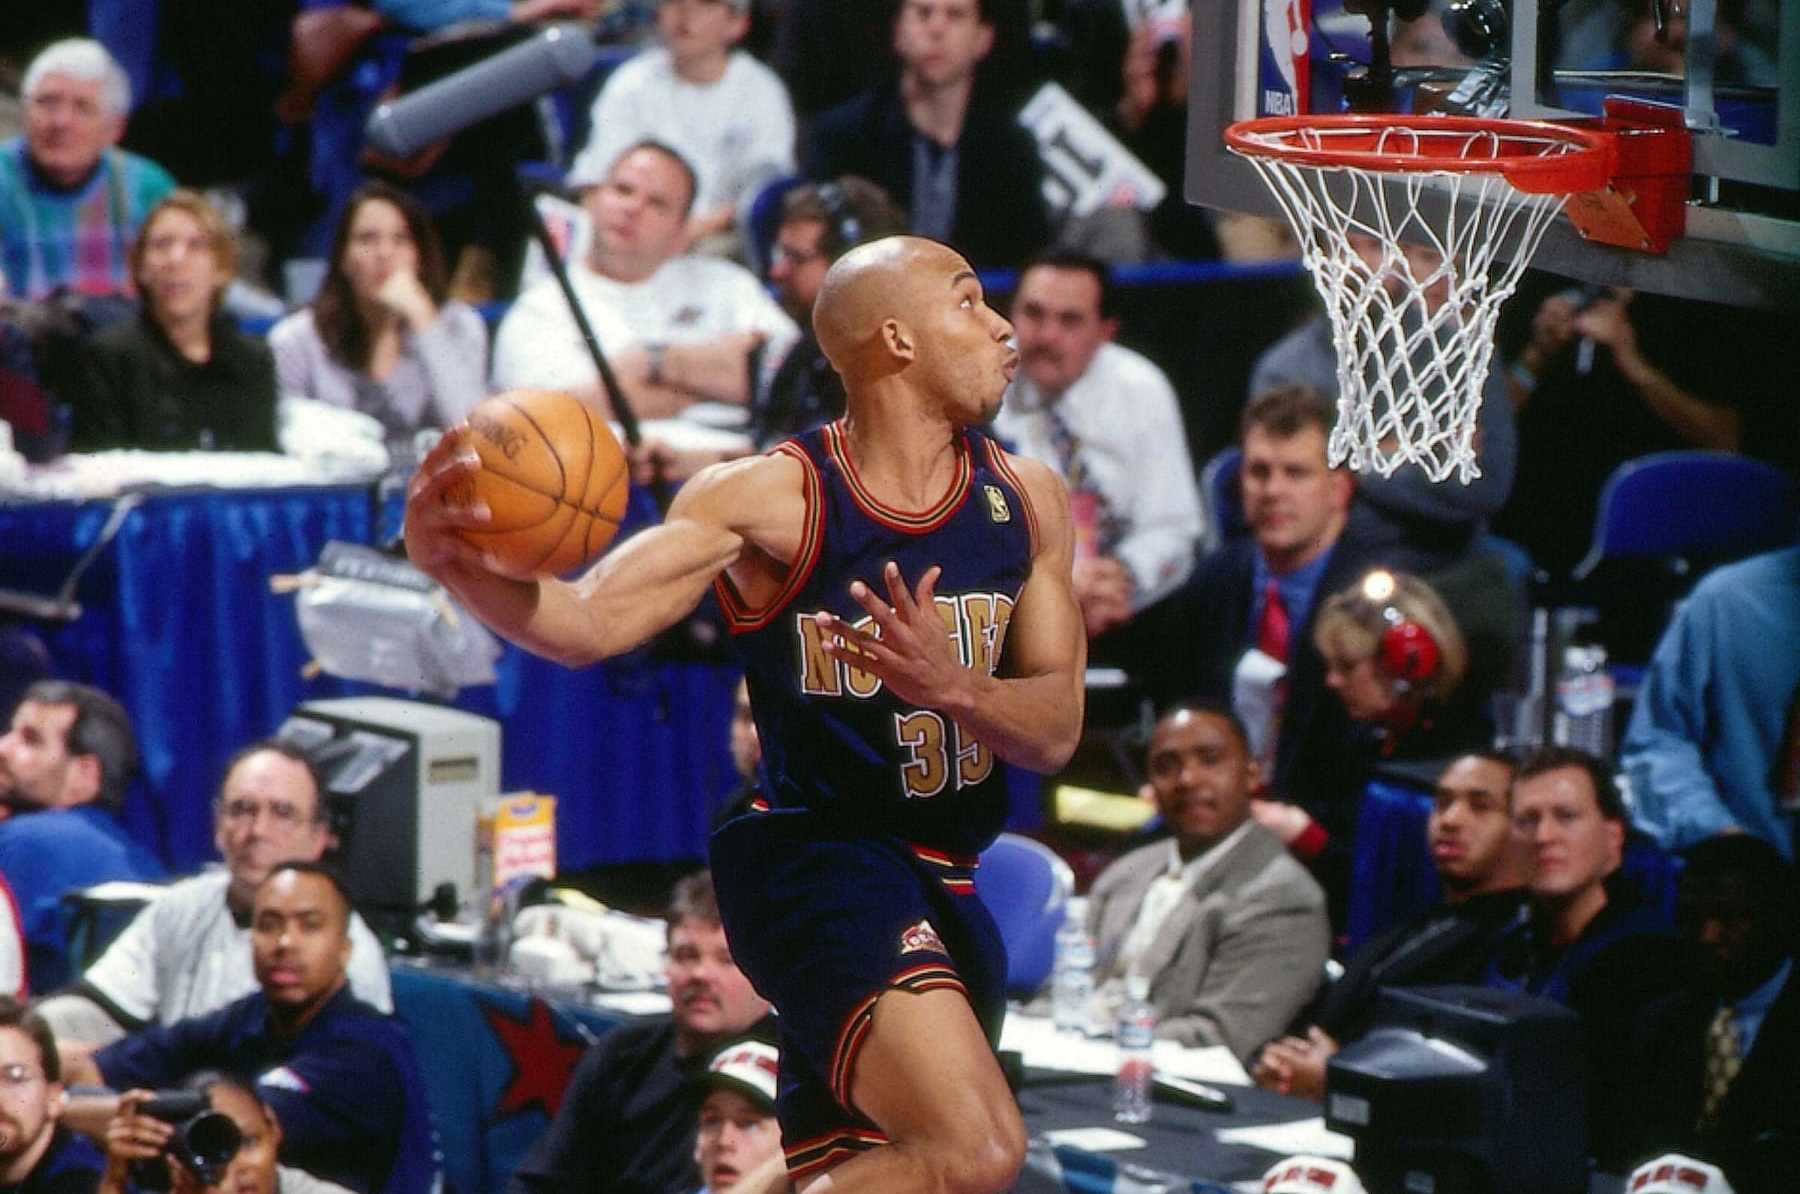 1996-97 NBA Hoops Ben Wallace Rookie RC #314 Washington Bullets Basketball